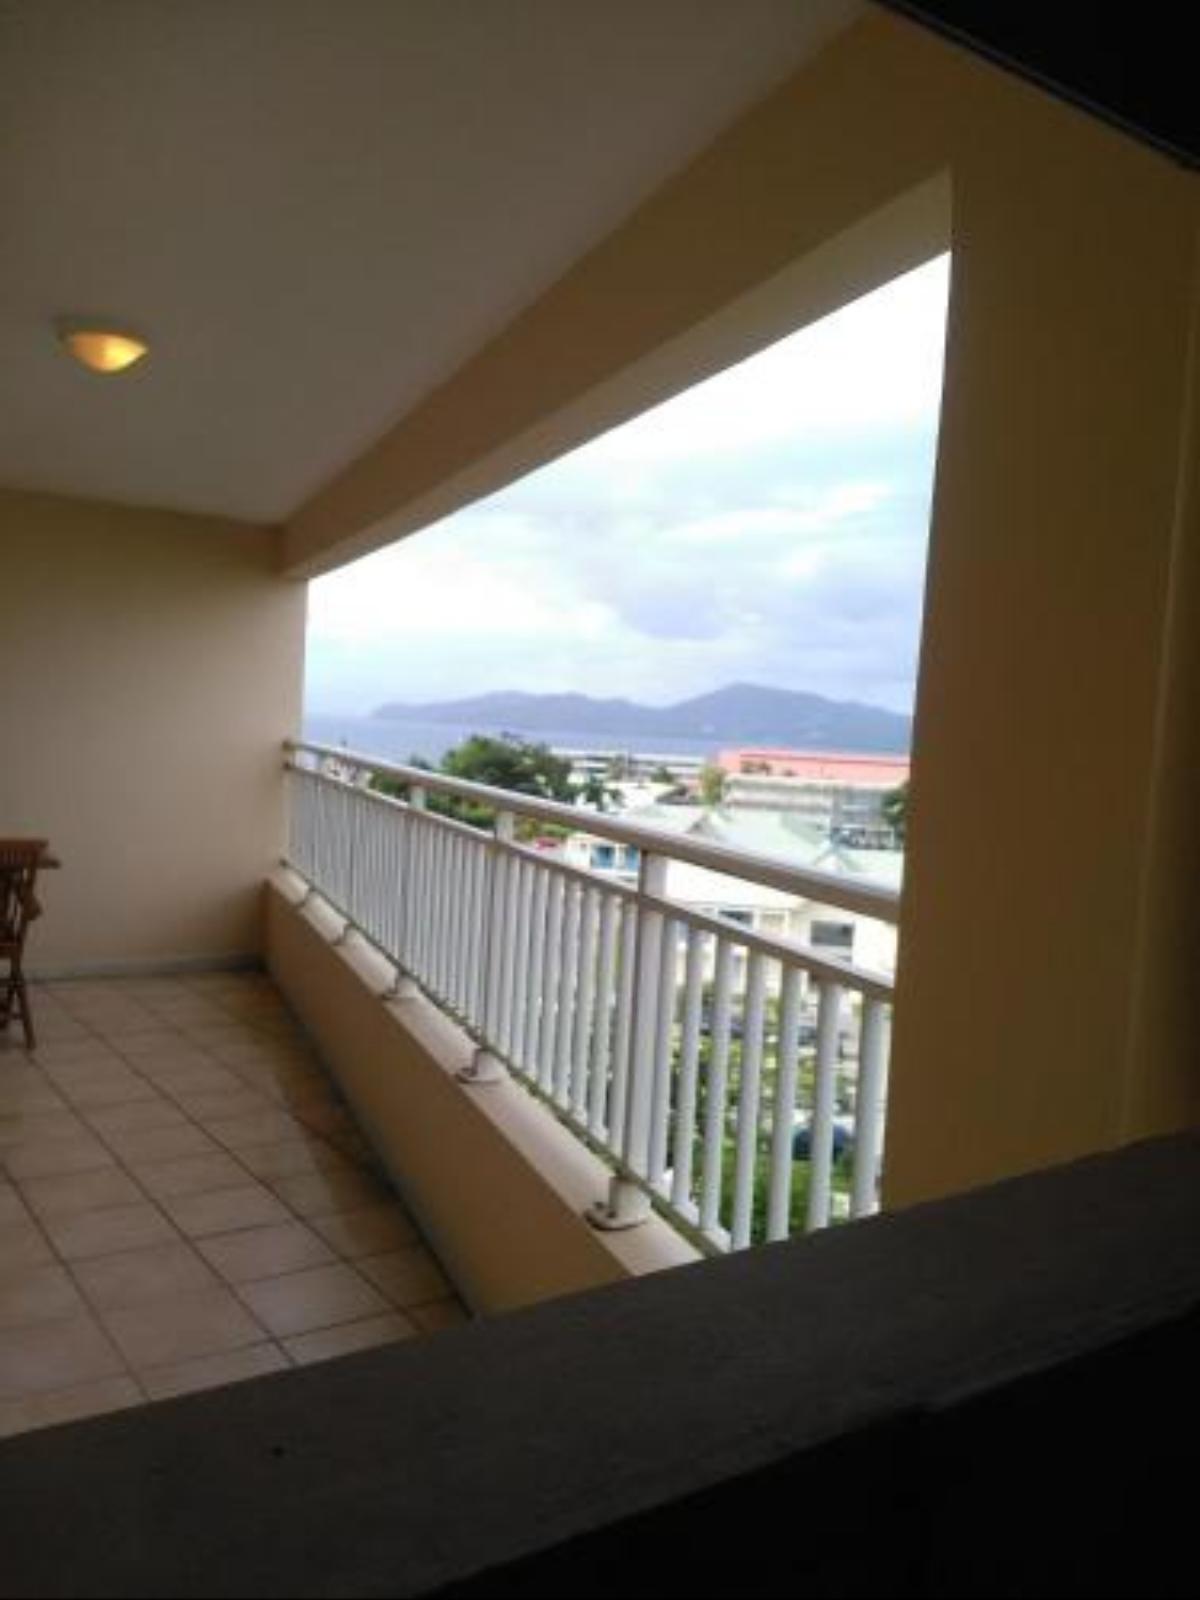 Orange Appartement Hotel Fort-de-France Martinique